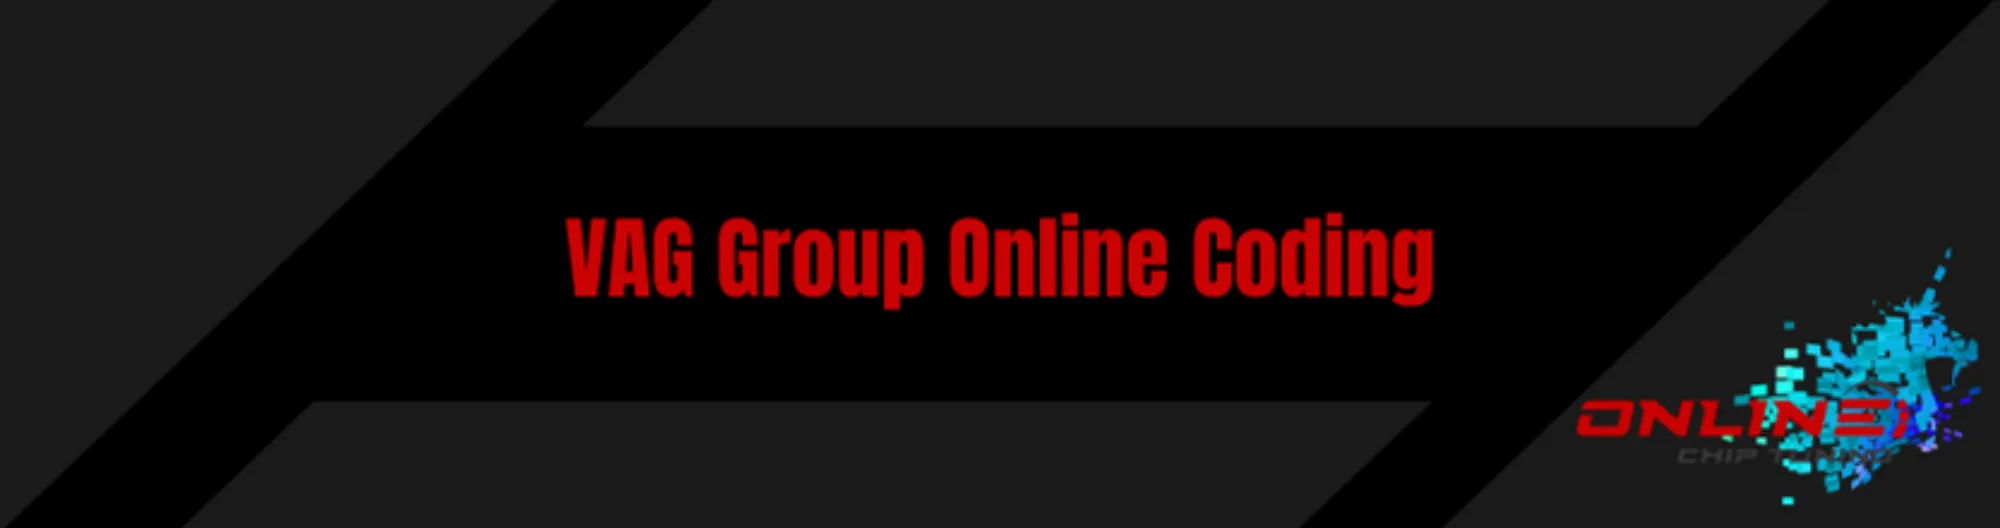 VAG Group Online Coding